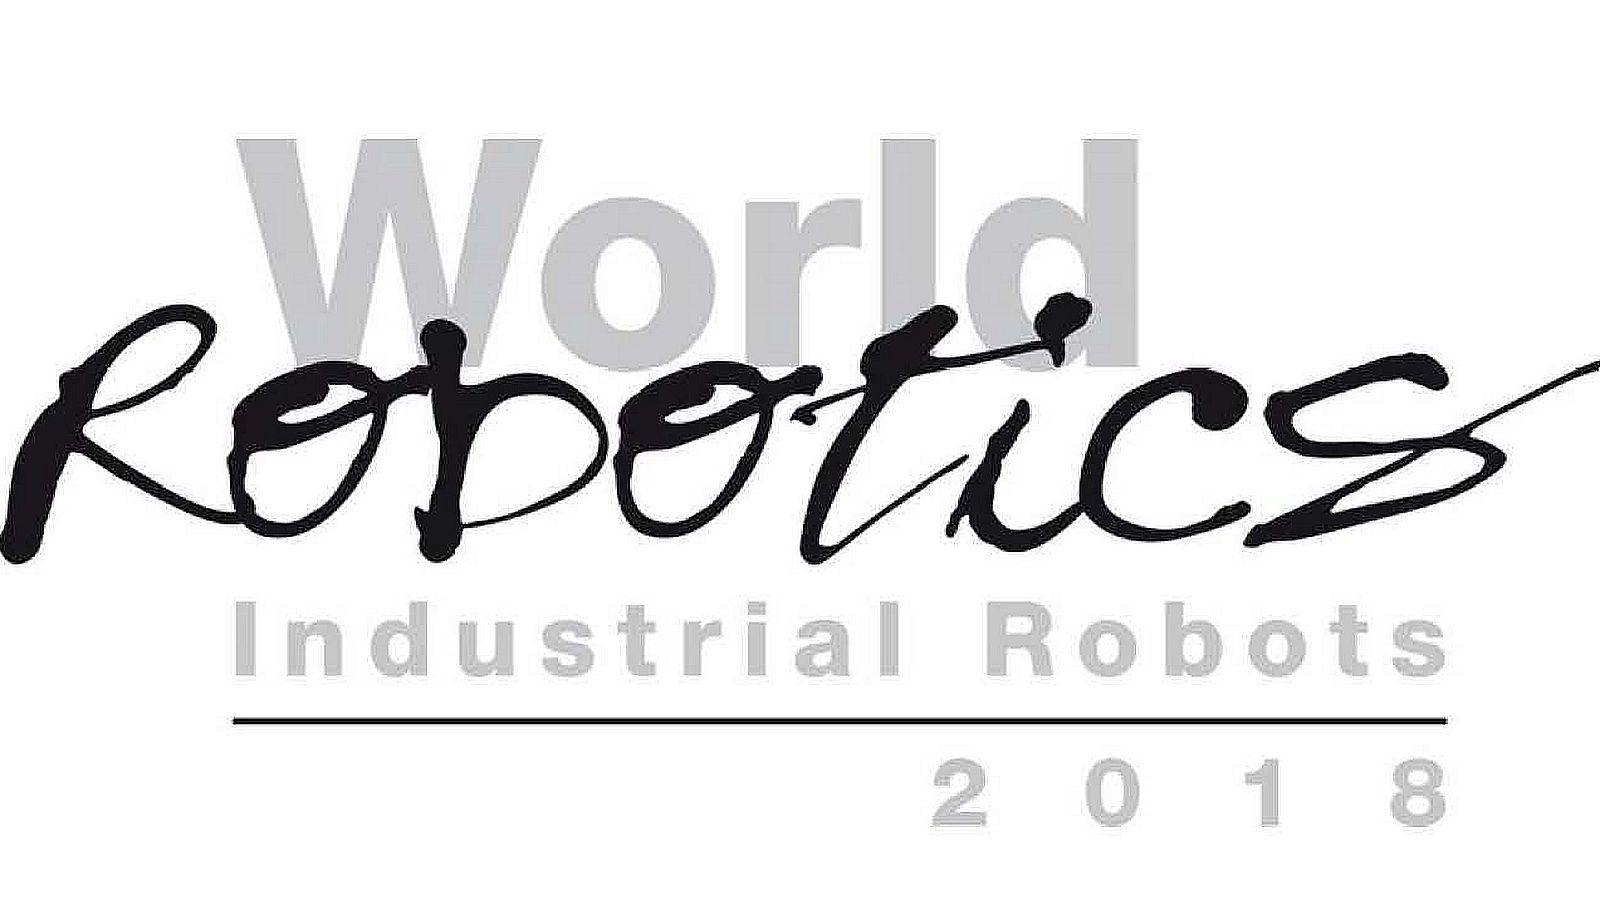 Black and White Robot Logo - International Federation of Robotics